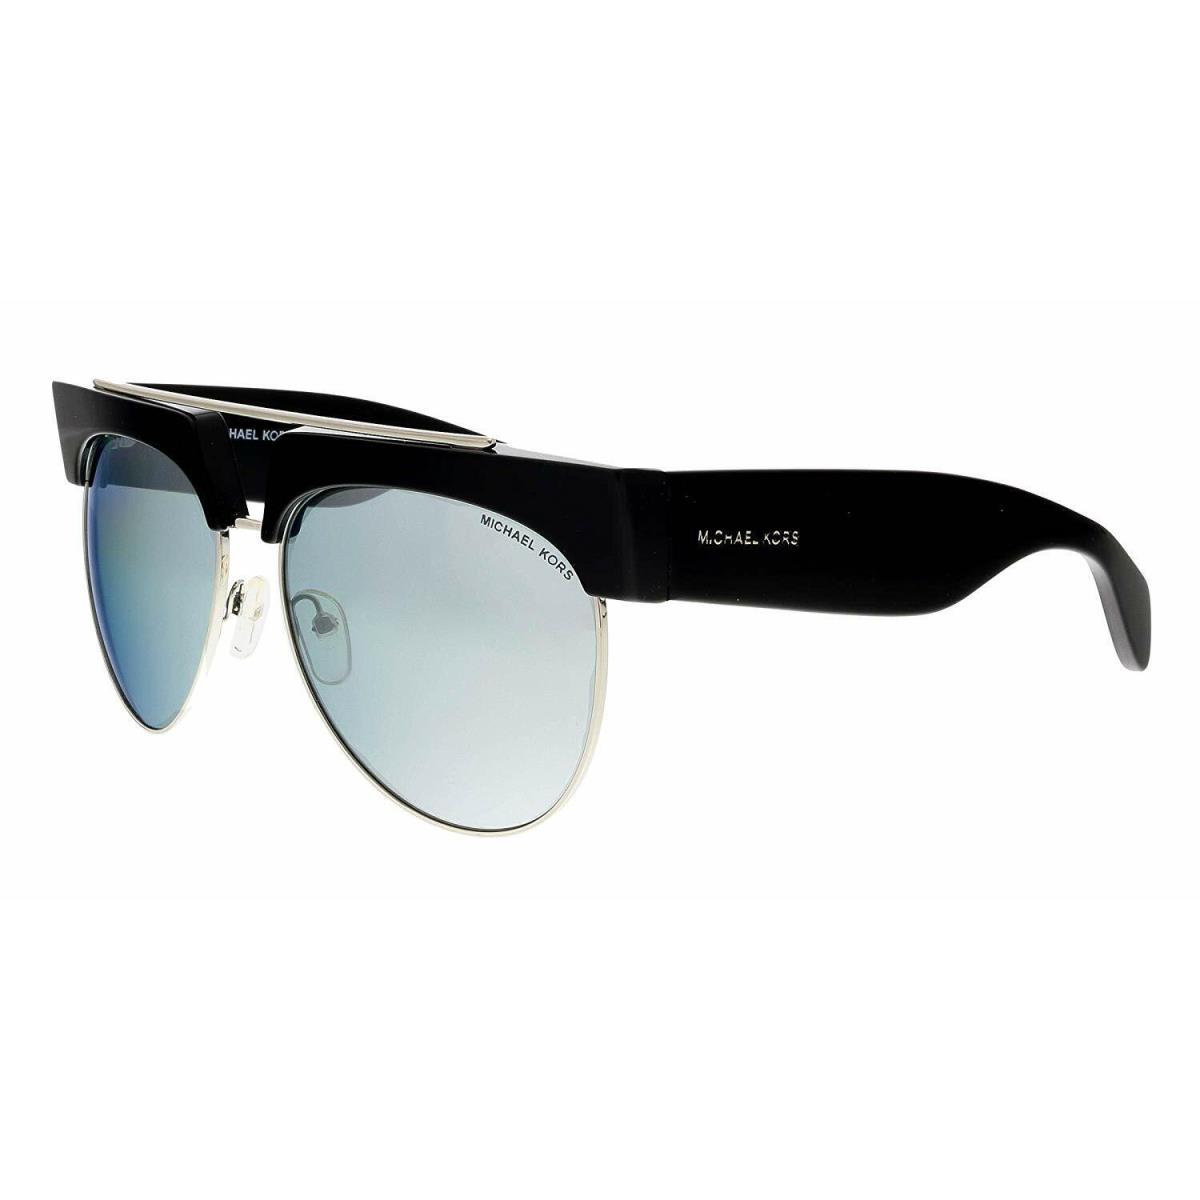 Michael Kors Milan MK2075 30051U Sunglasses Black-silver / Silver Mirror Lens - Silver Frame